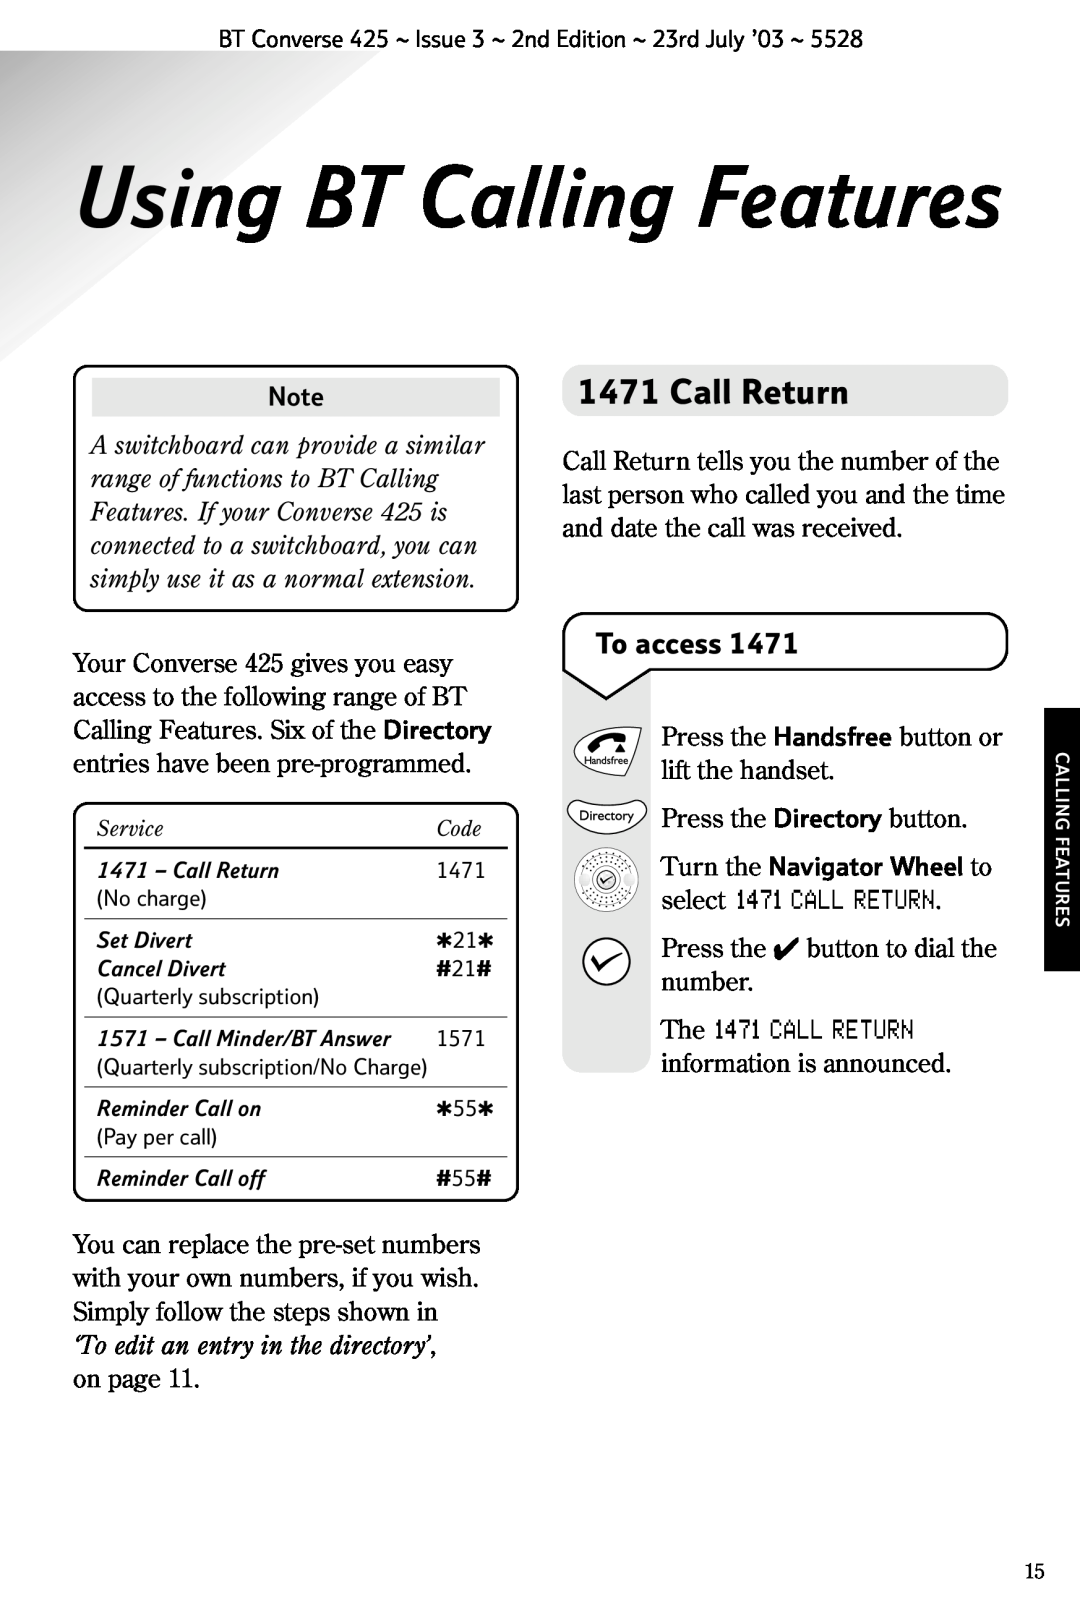 BT 425 manual Call Return, To access, The 1471 CALL RETURN, Turn the Navigator Wheel to select 1471 CALL RETURN 